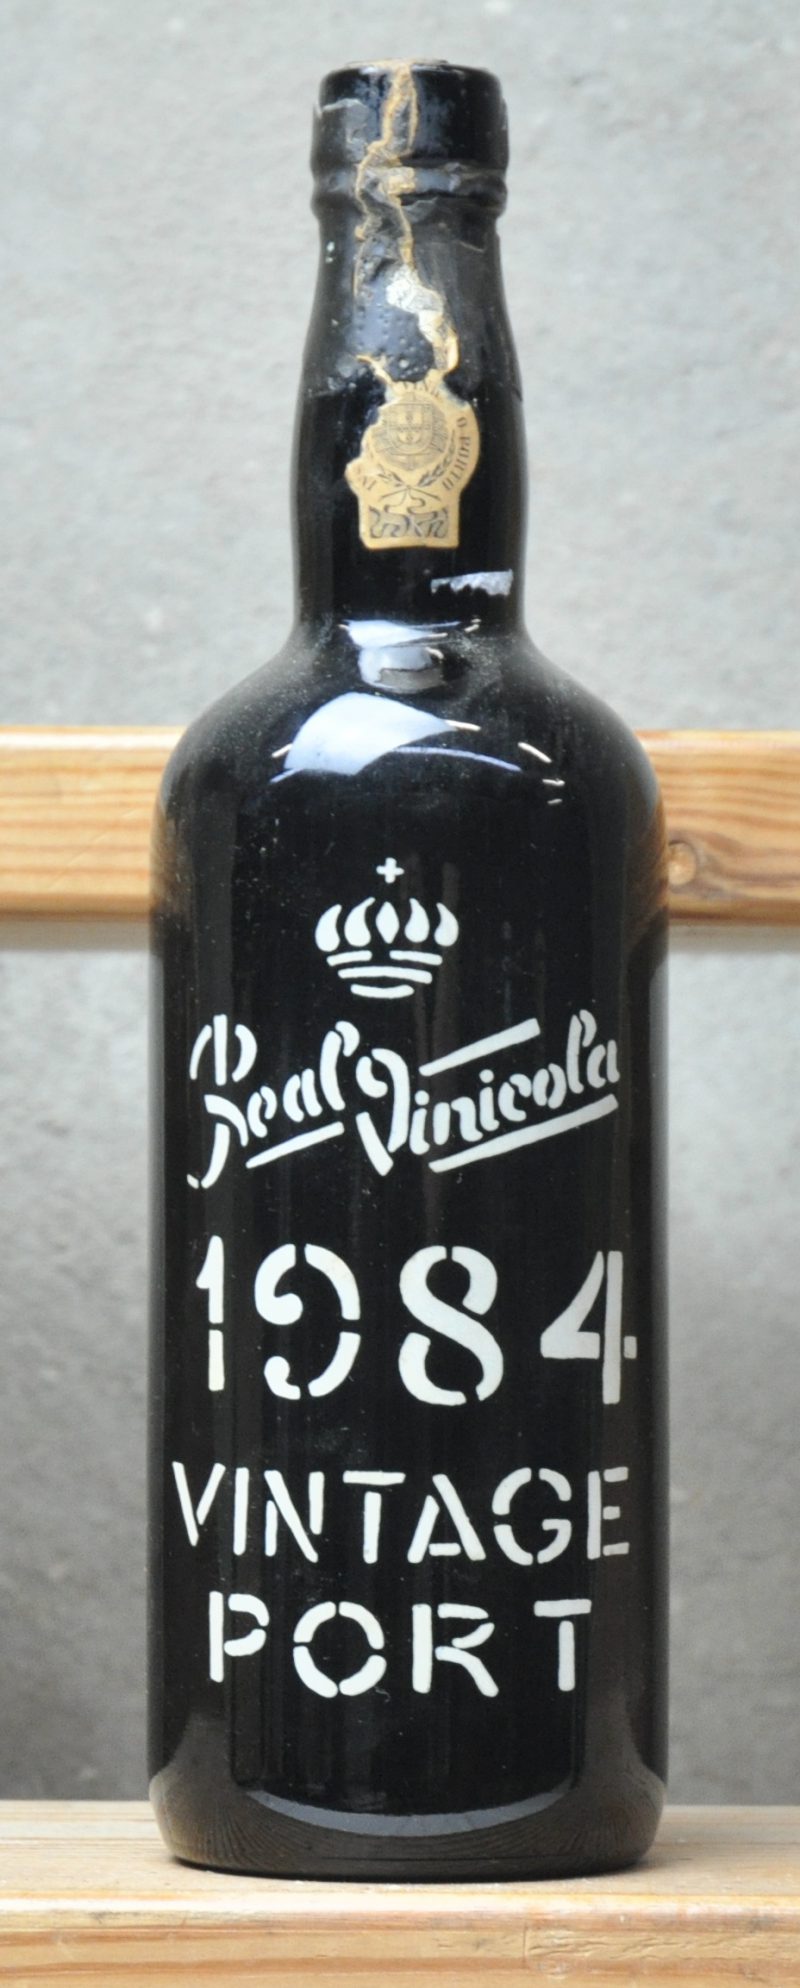 Real Vinicola Port   Real Comp. Vinicola do Norte de Portugal, Gaia (Oporto) M.O.  1984  aantal: 1 Bt.